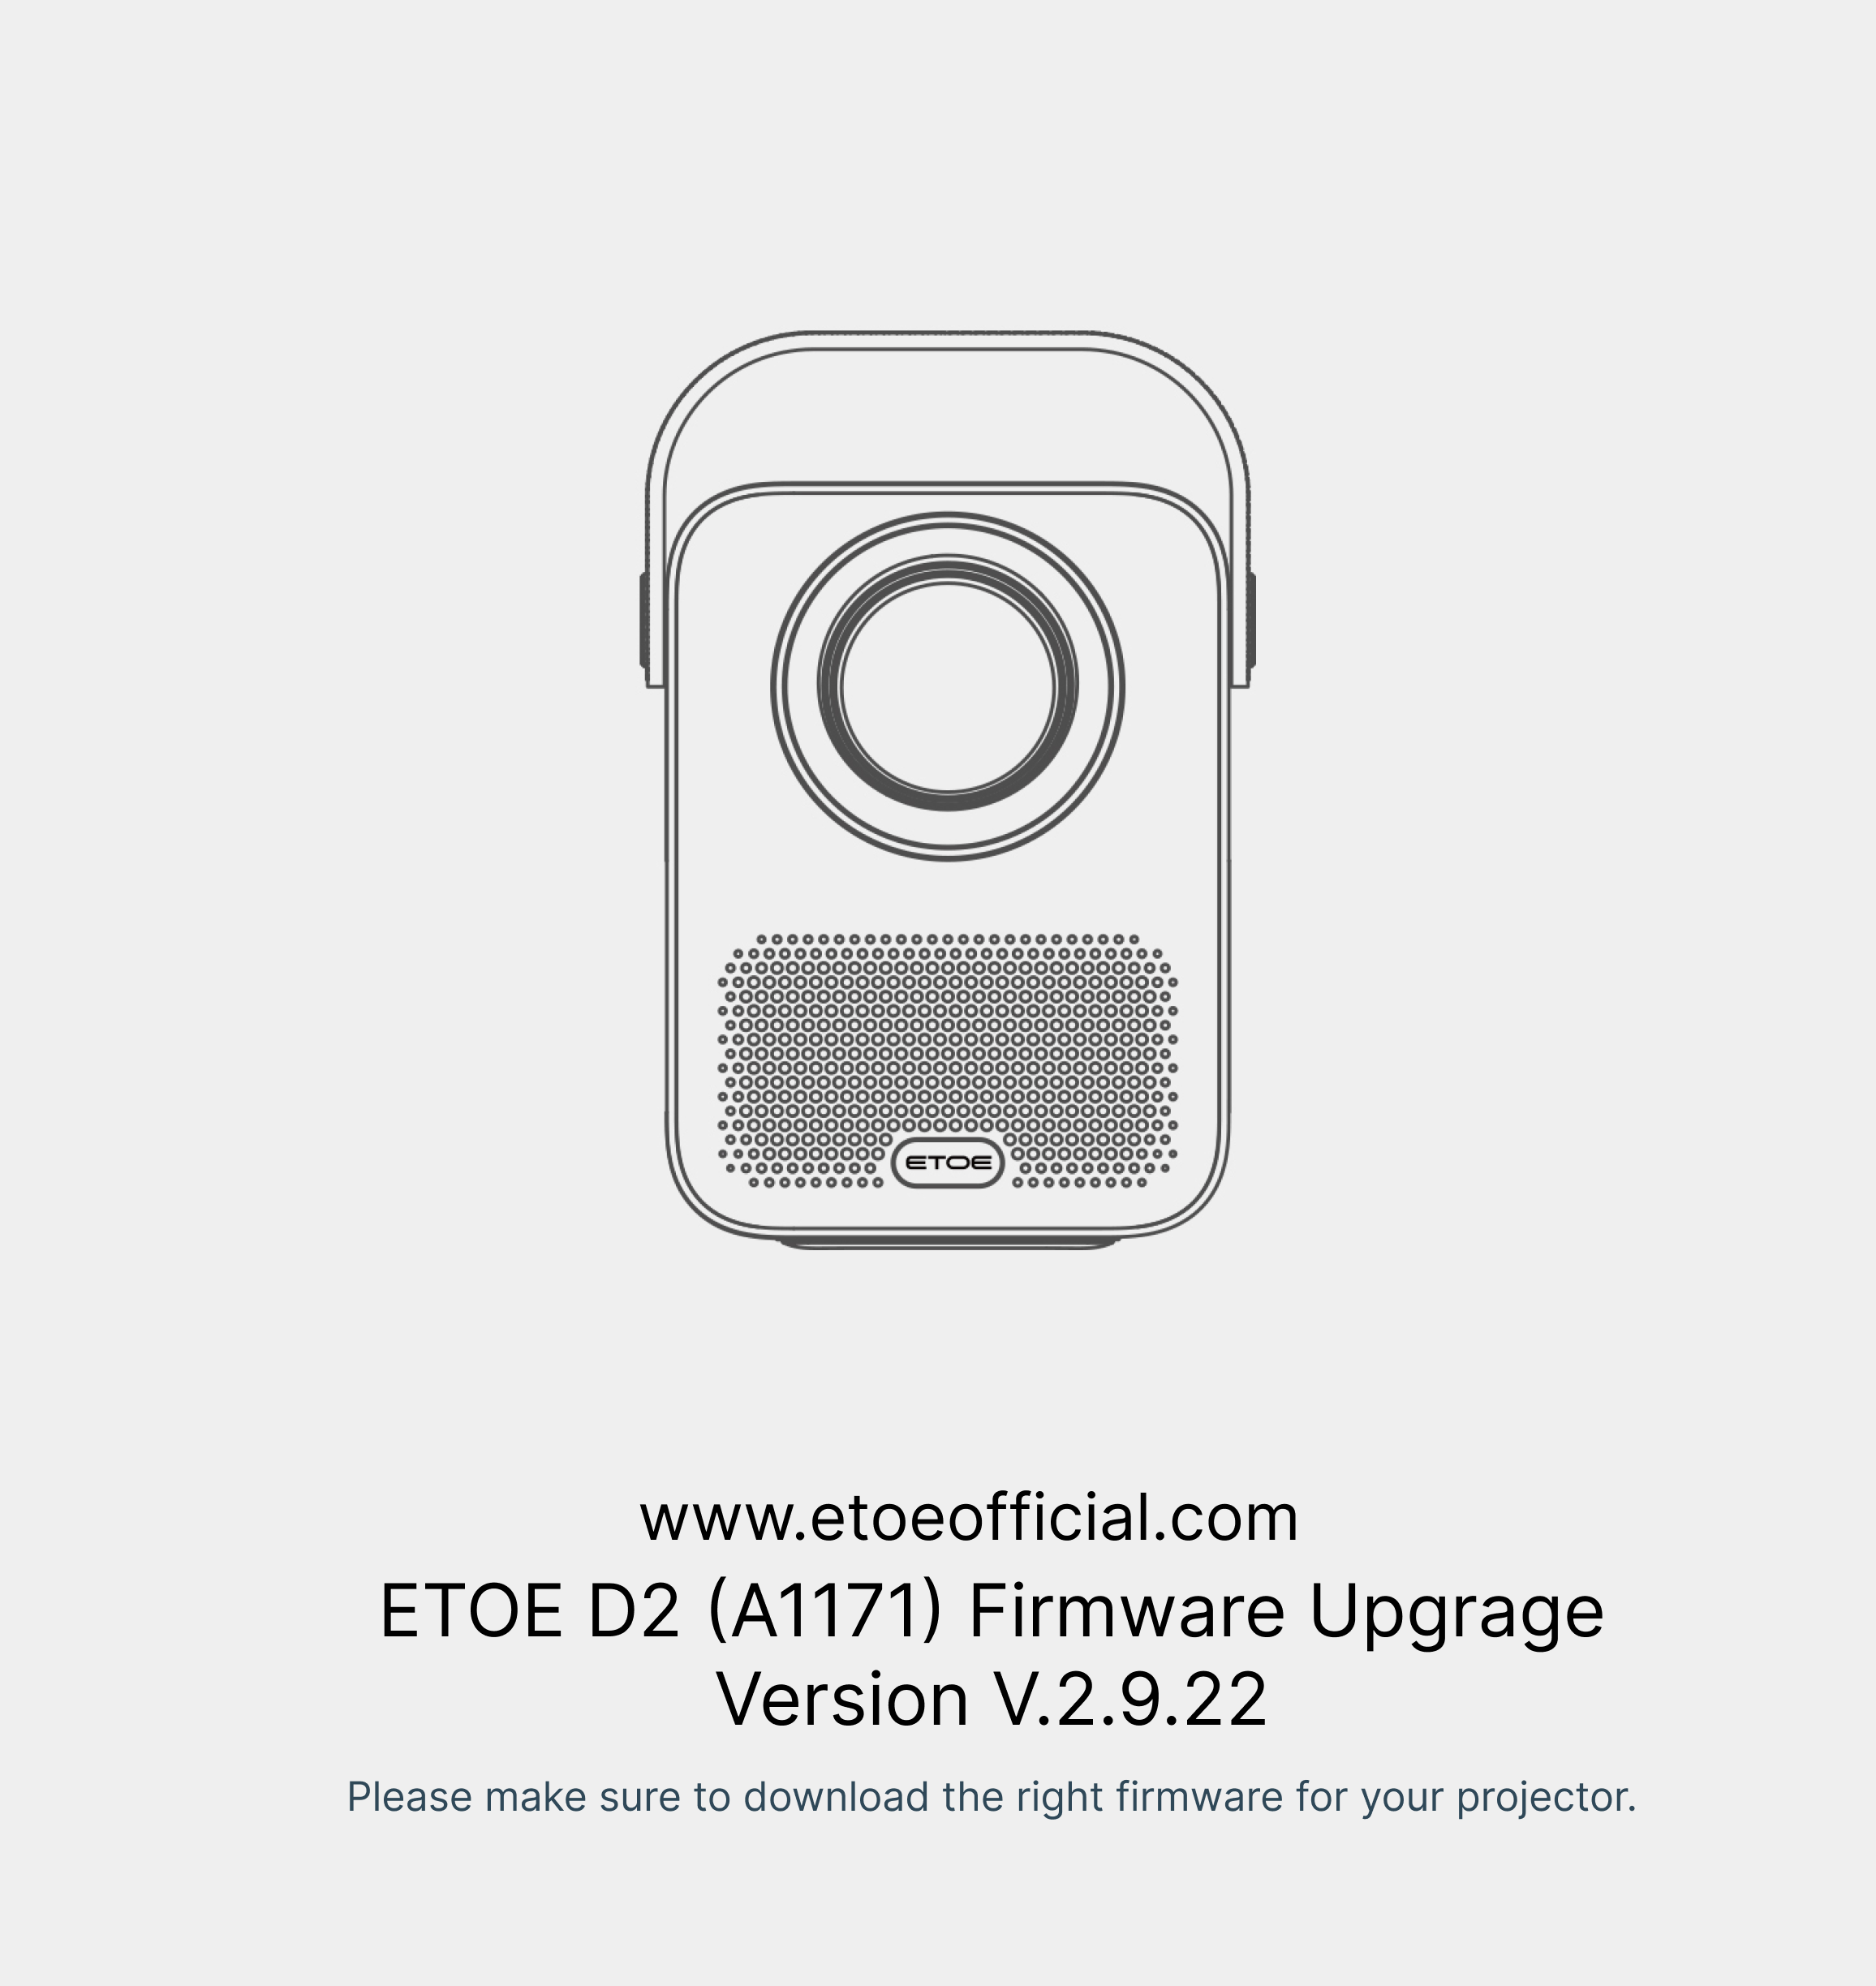 ETOE D2 (A1171) Firmware V.2.9.22 versione rara